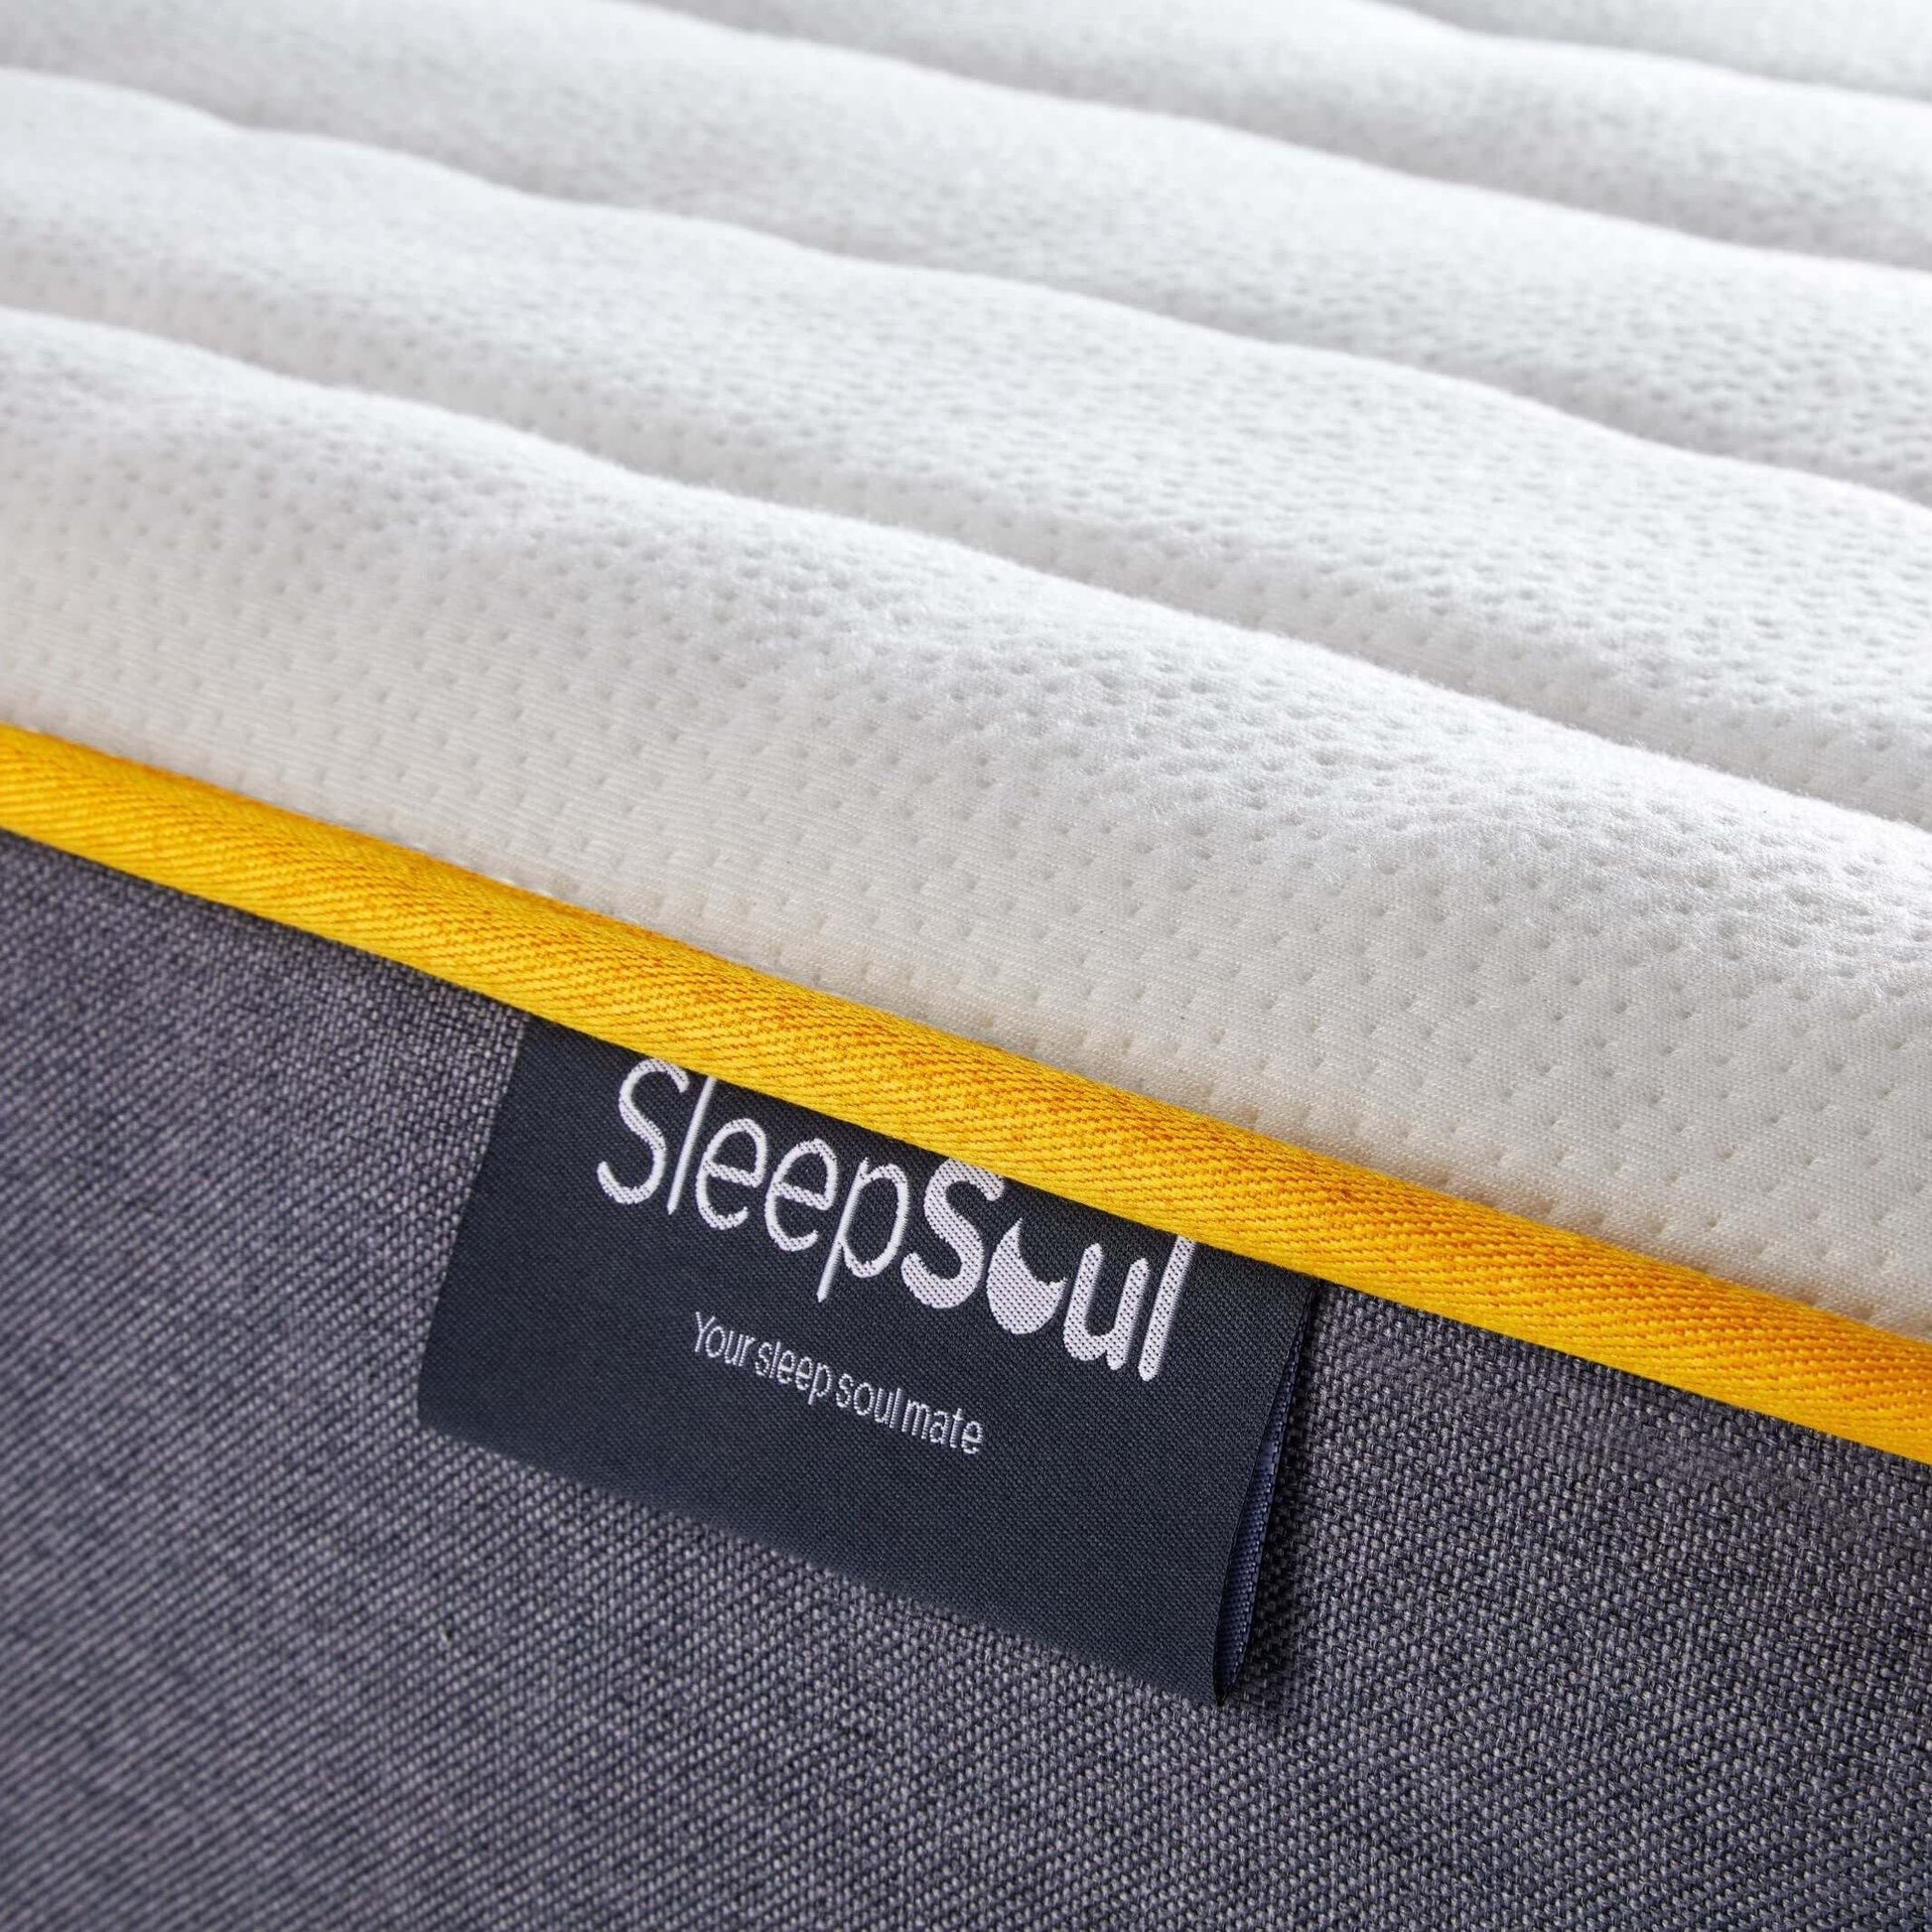 SleepSoul balance 800 pocket spring and memory foam standard single mattress branding